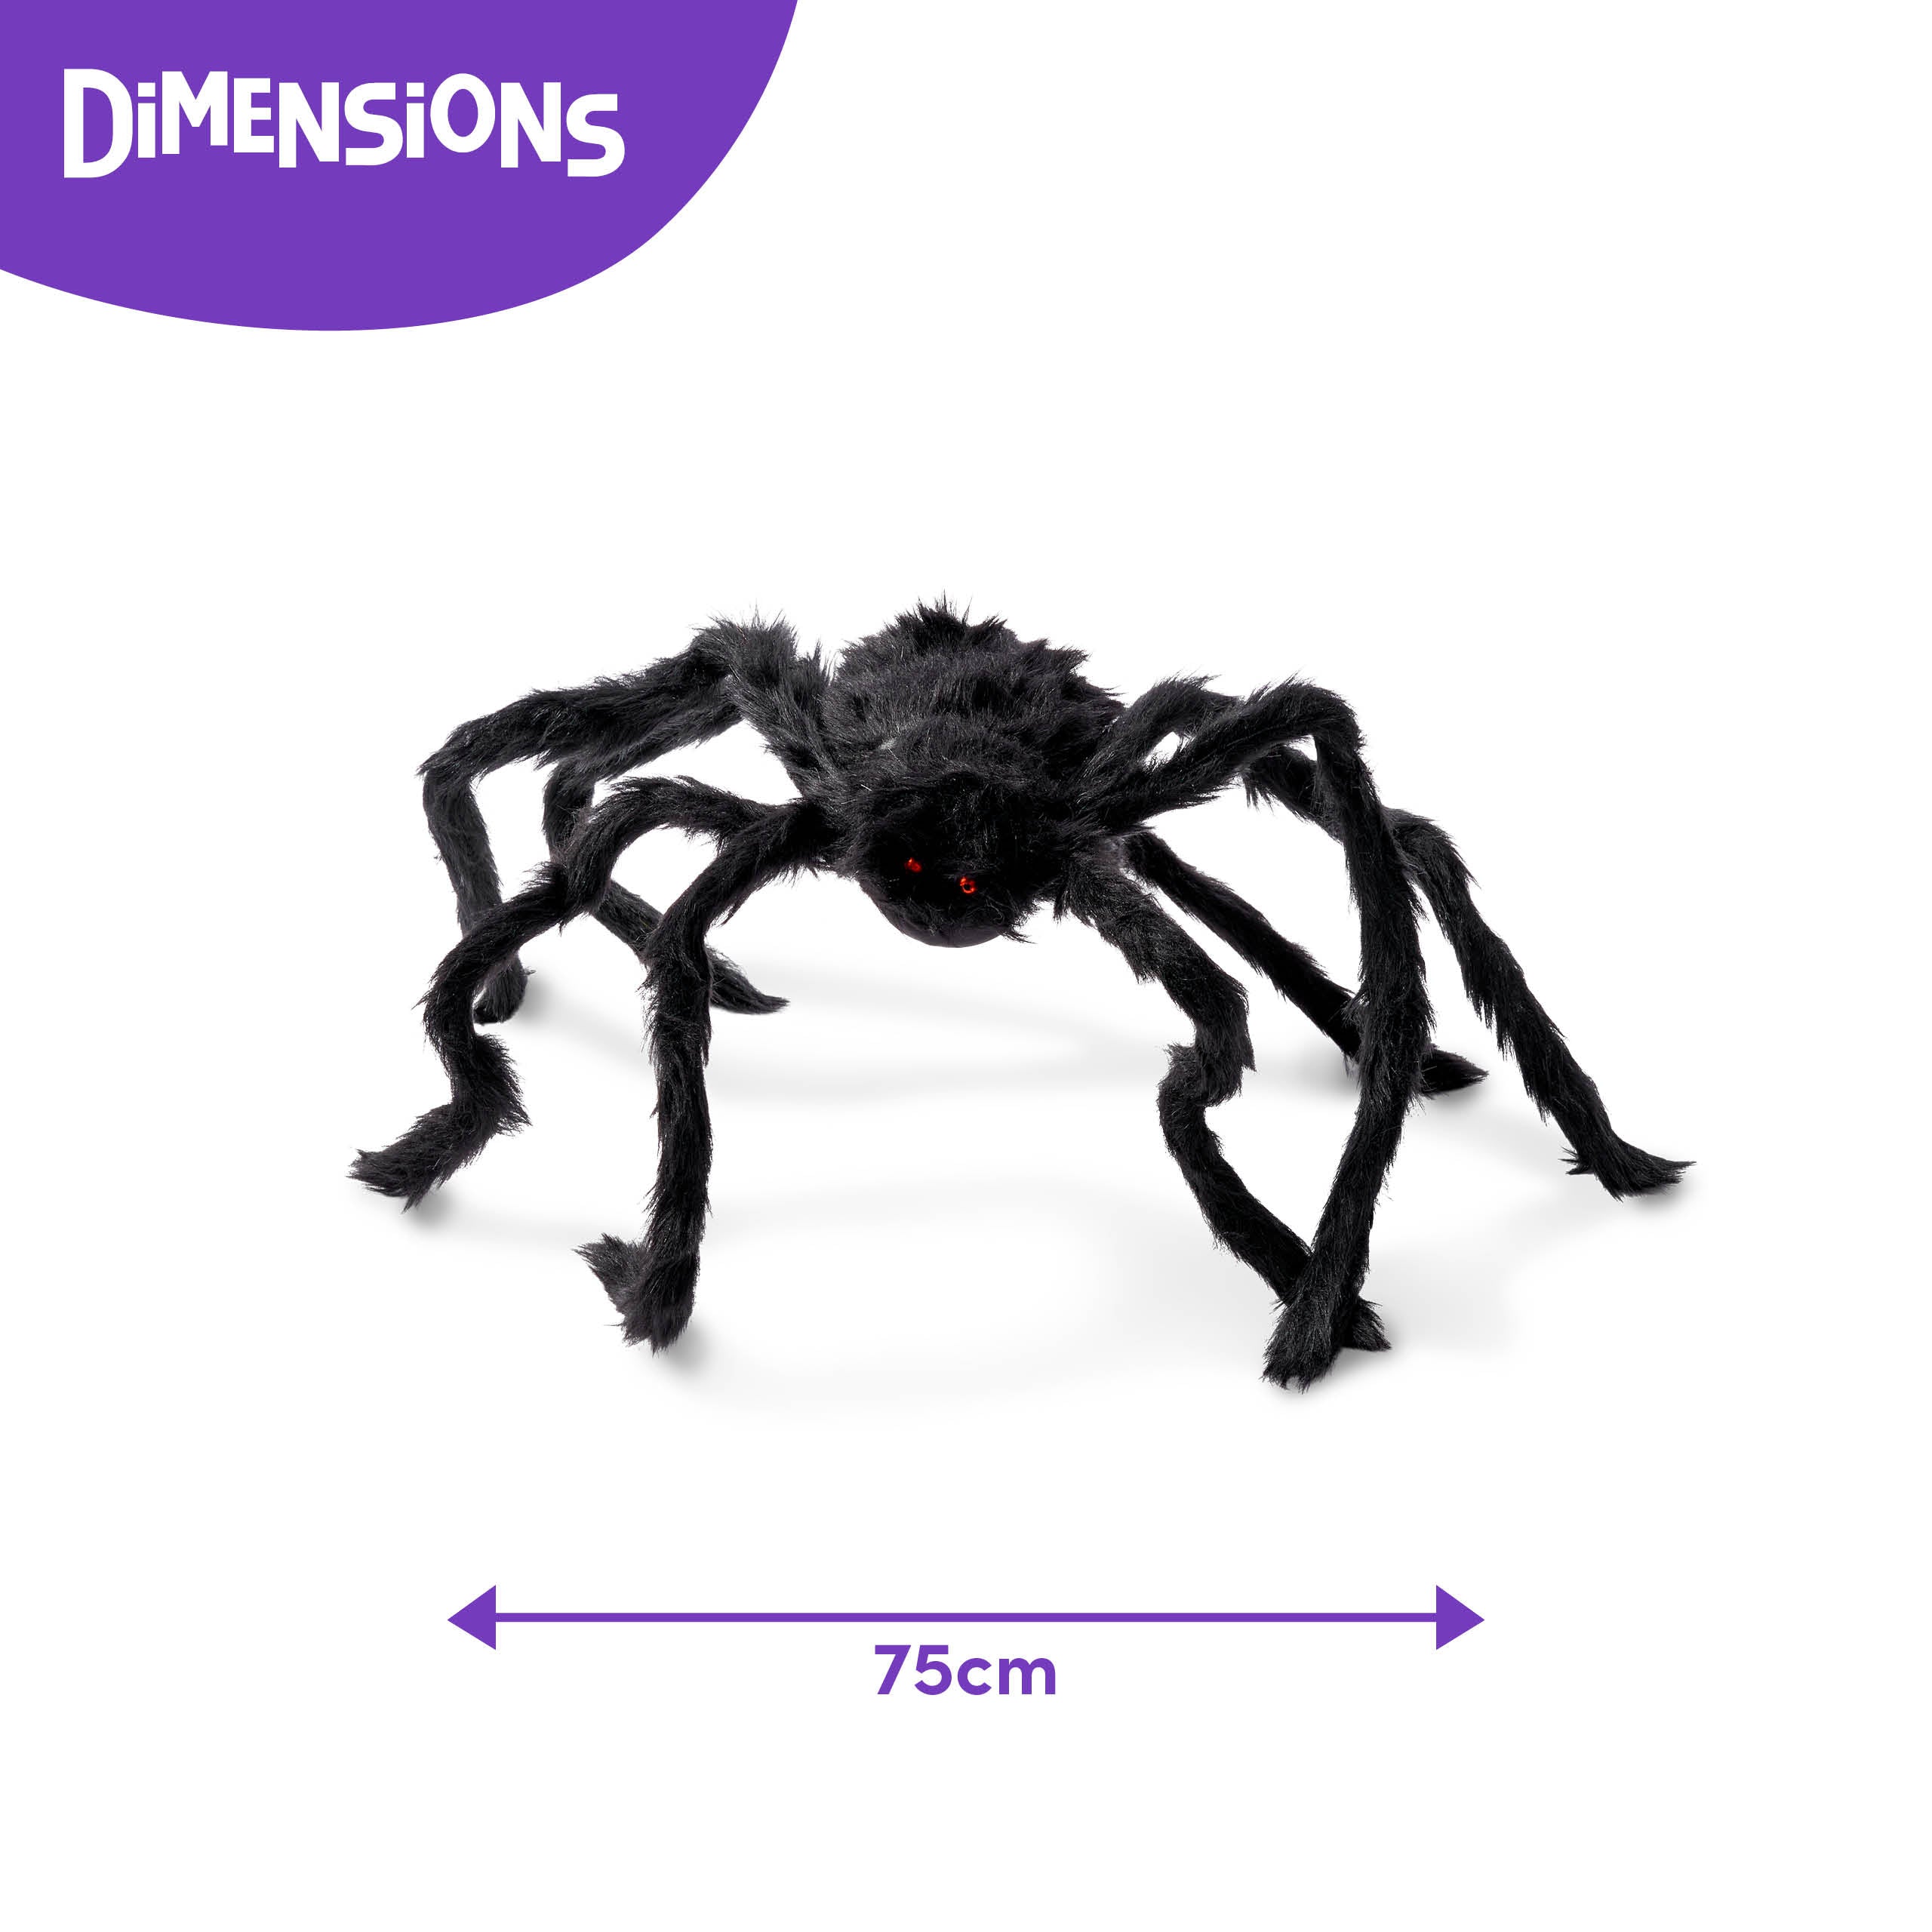 3 Giant Black Halloween Spiders